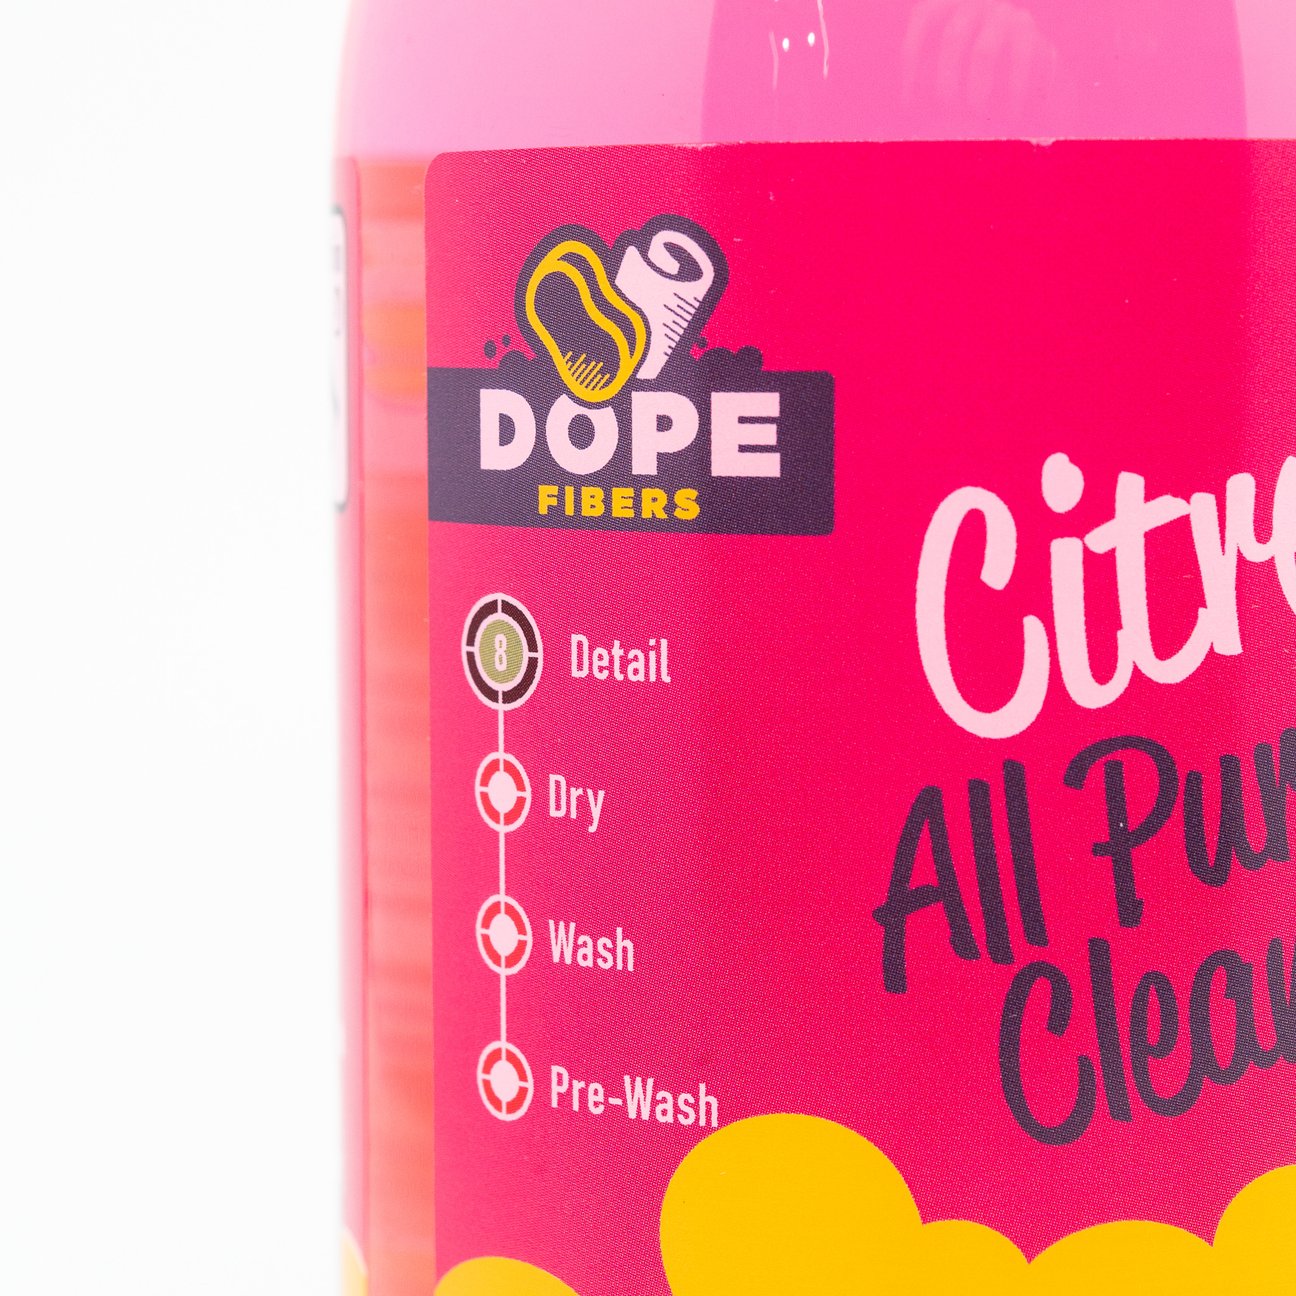 DopeFibers Citro All Purpose Cleaner - Sgrassotre Multiuso €12,95